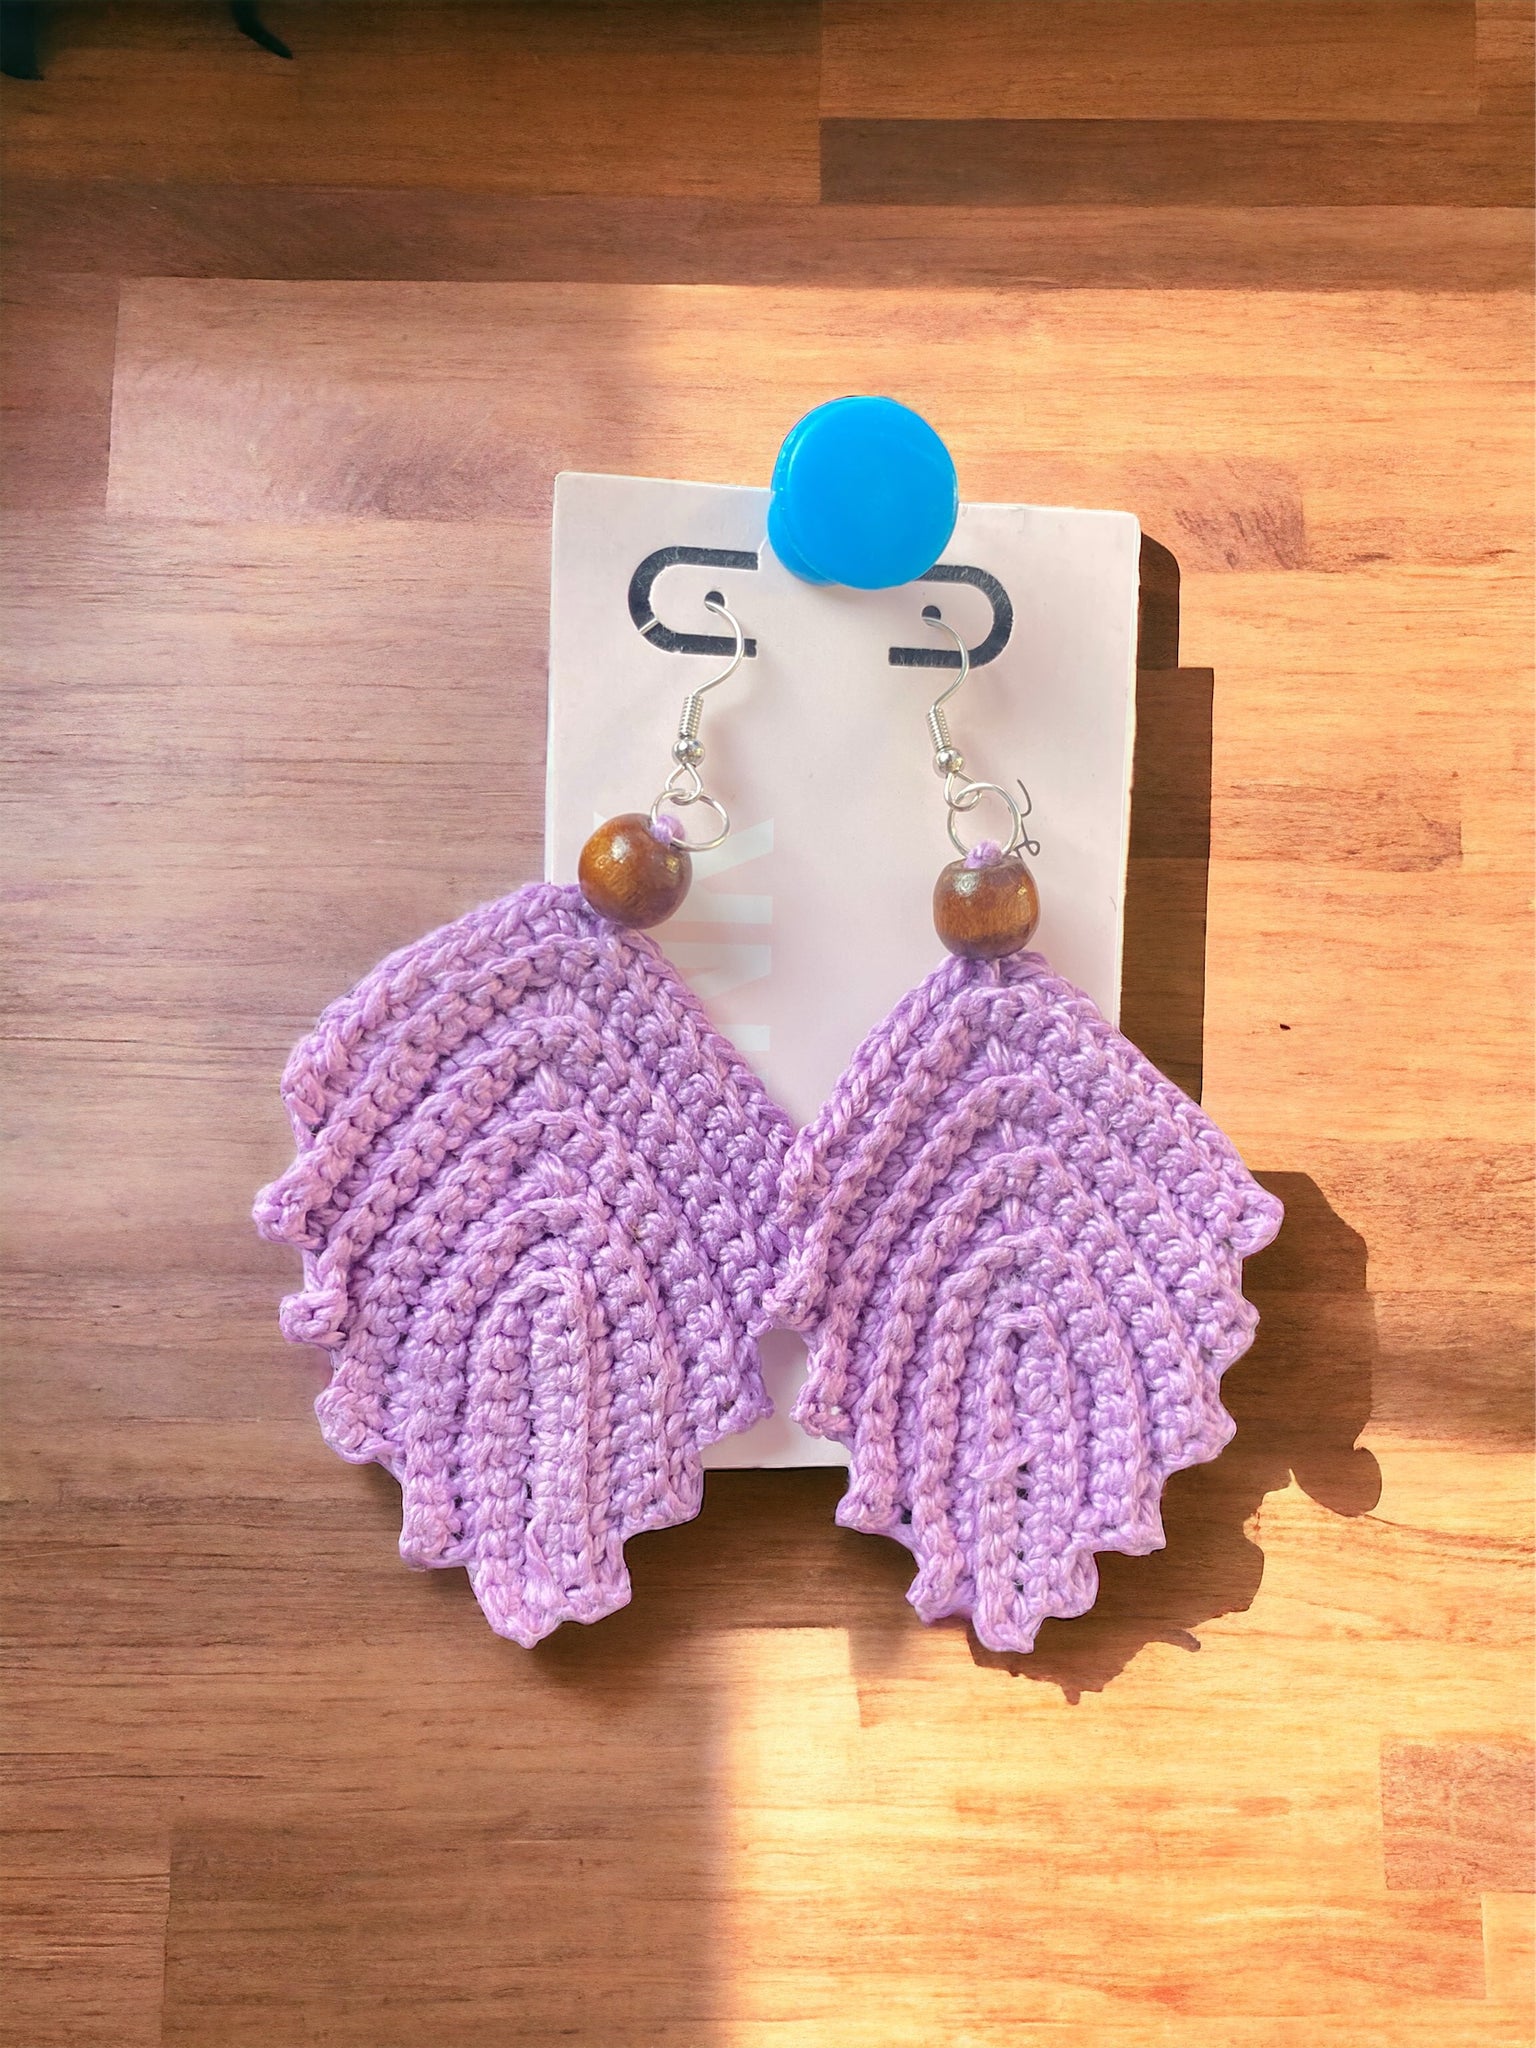 Violet|Feather Earrings|Crochet|Handmade